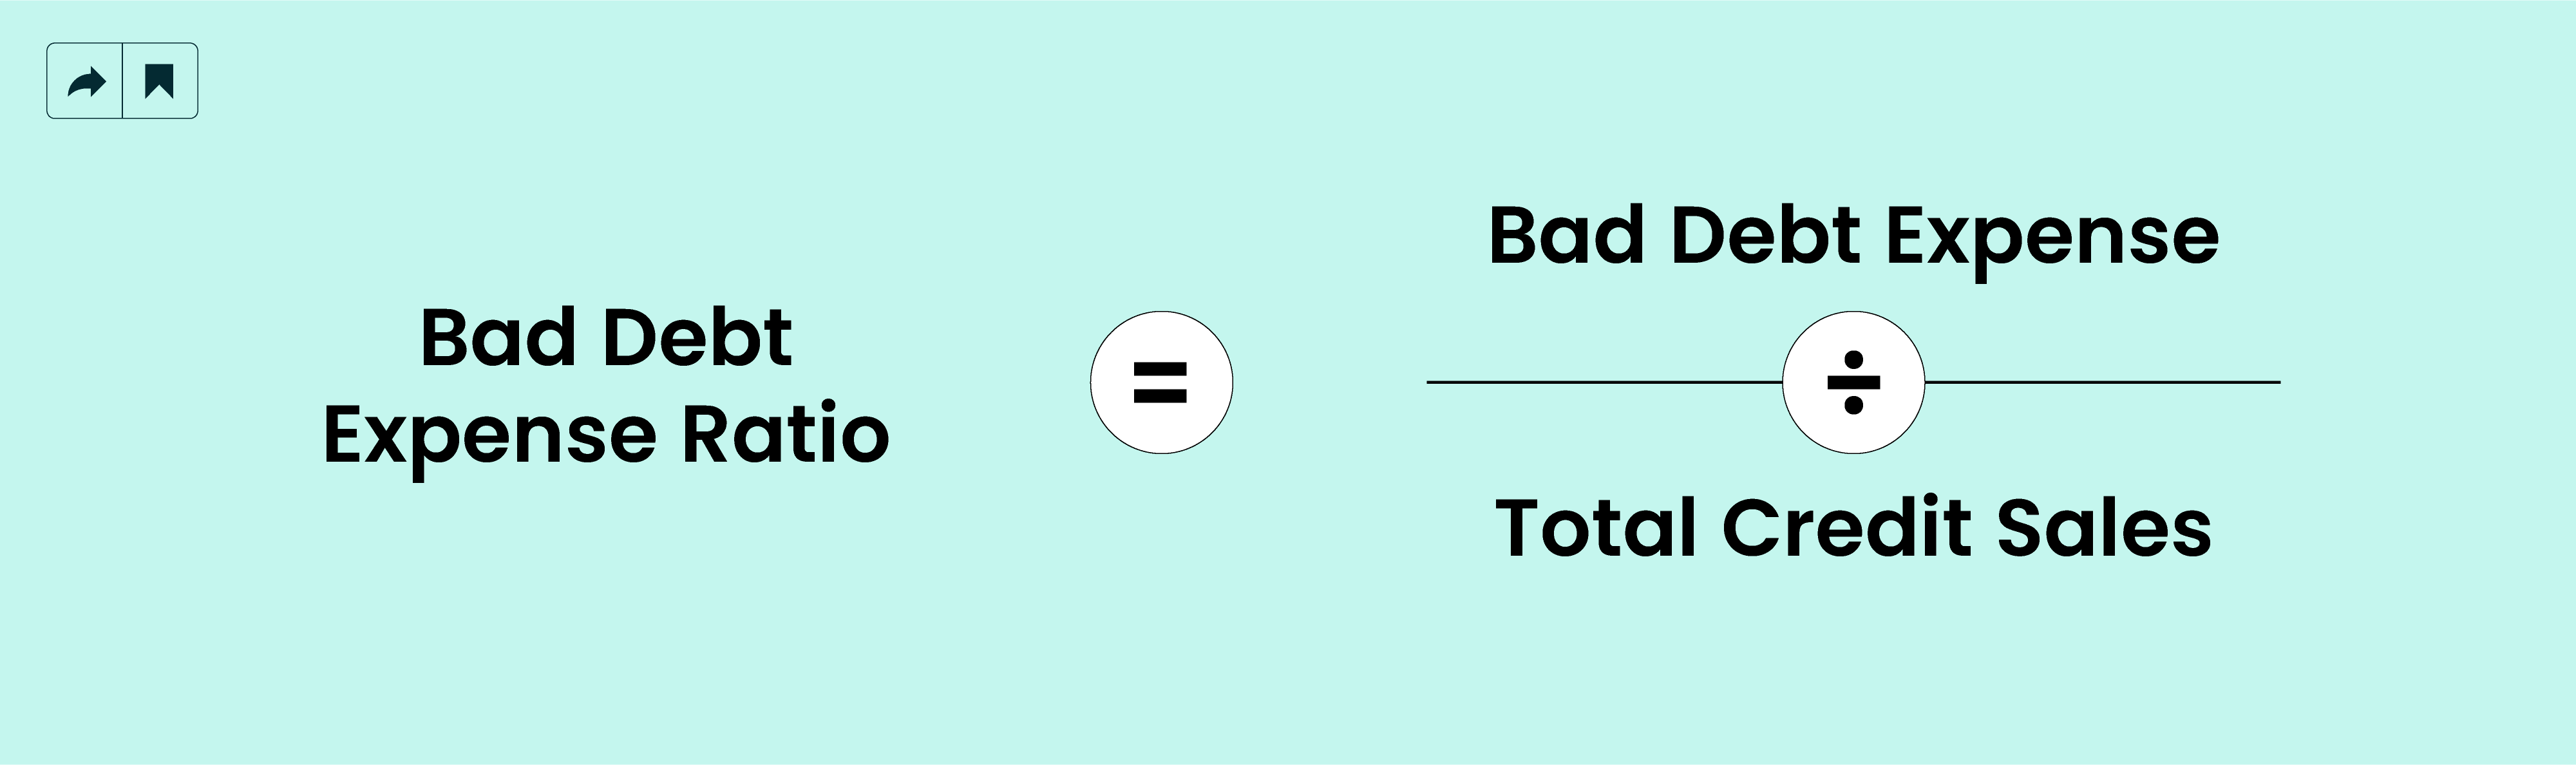 Bad Debt Expense Ratio: Account receivable formula